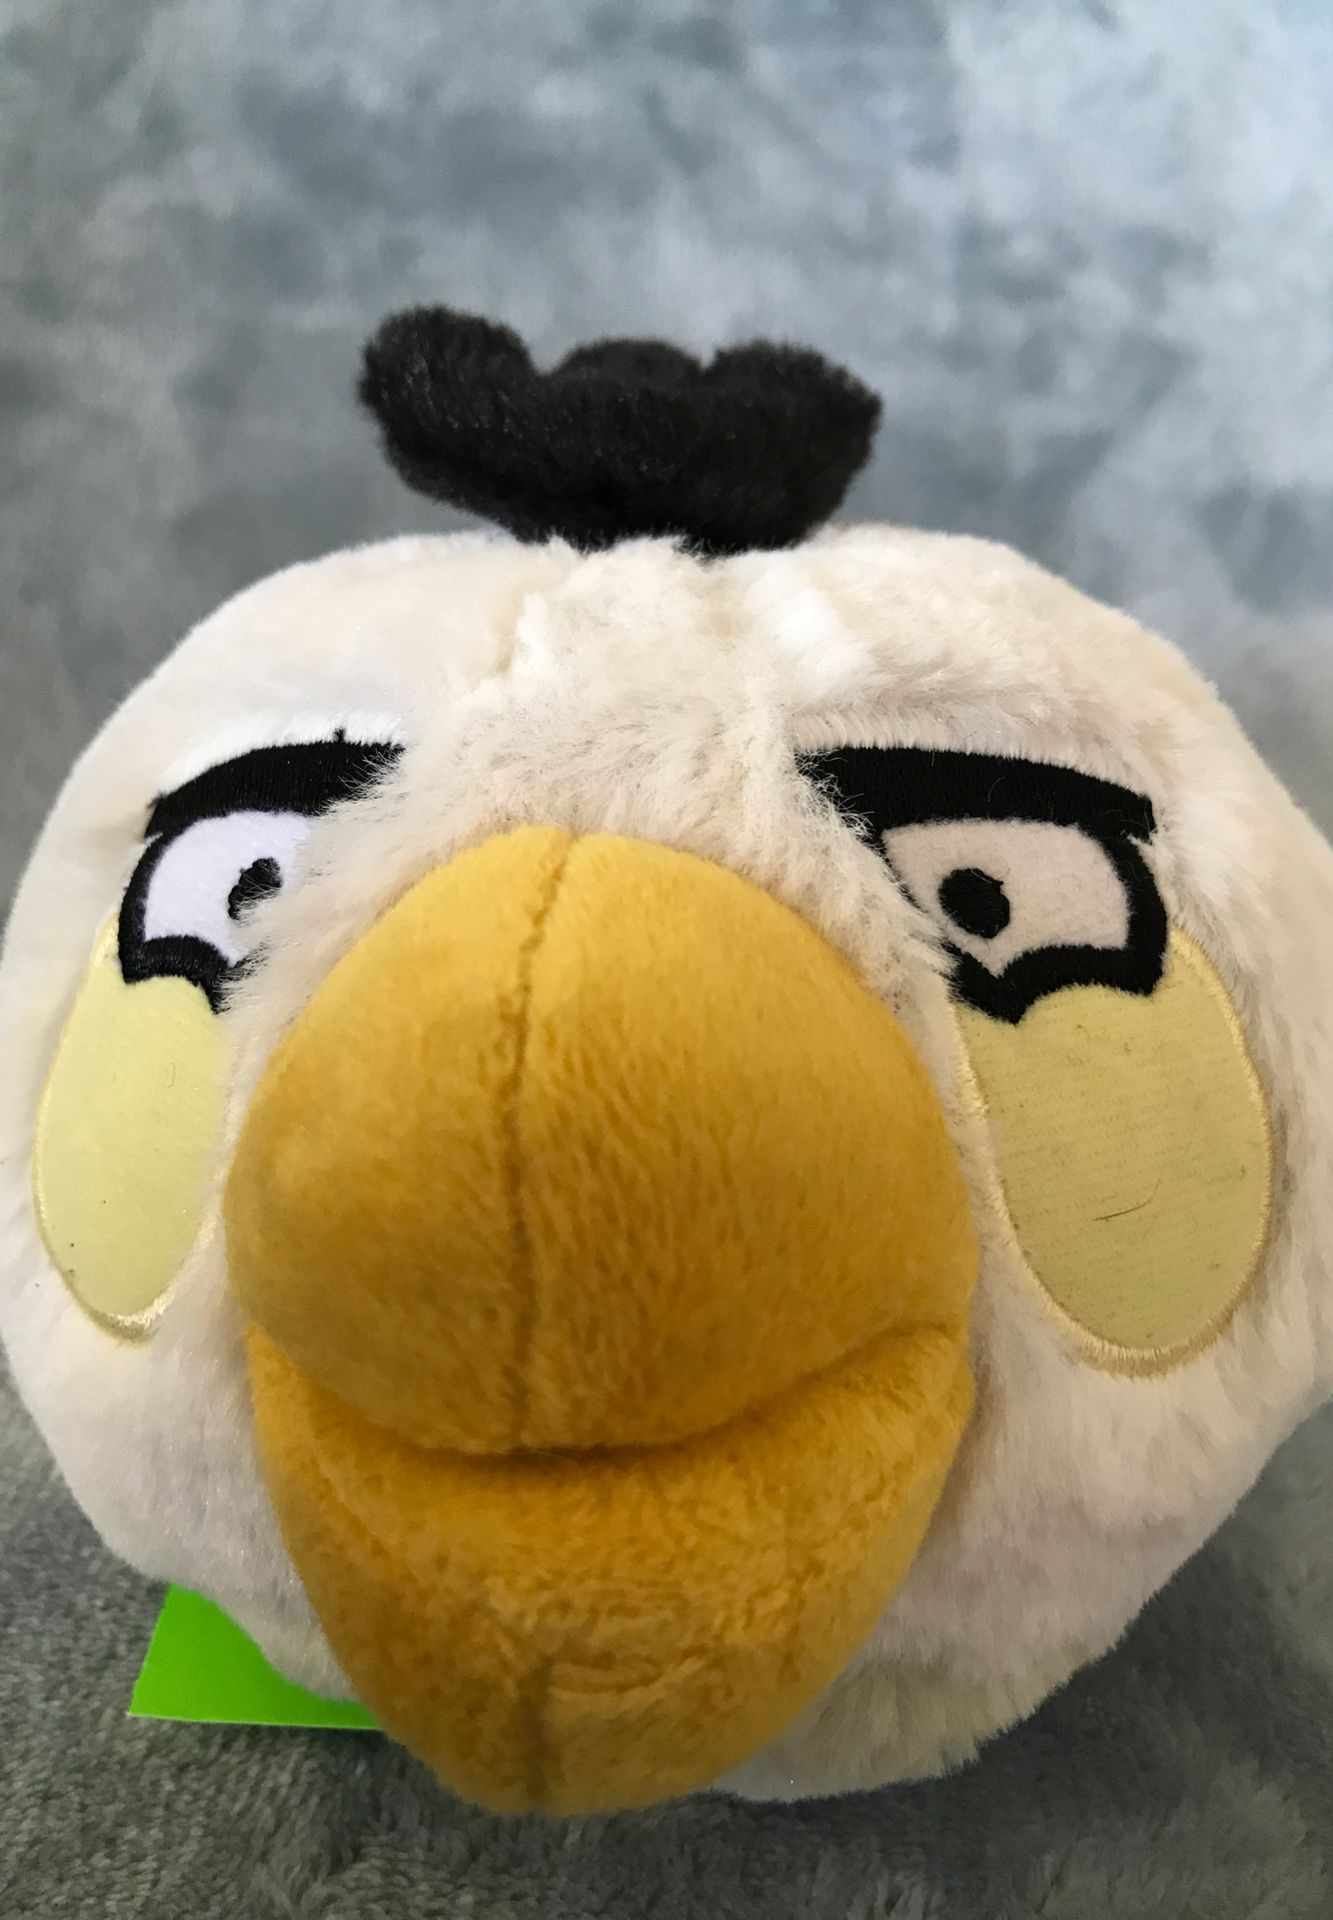 4” Angry Birds stuffed animal